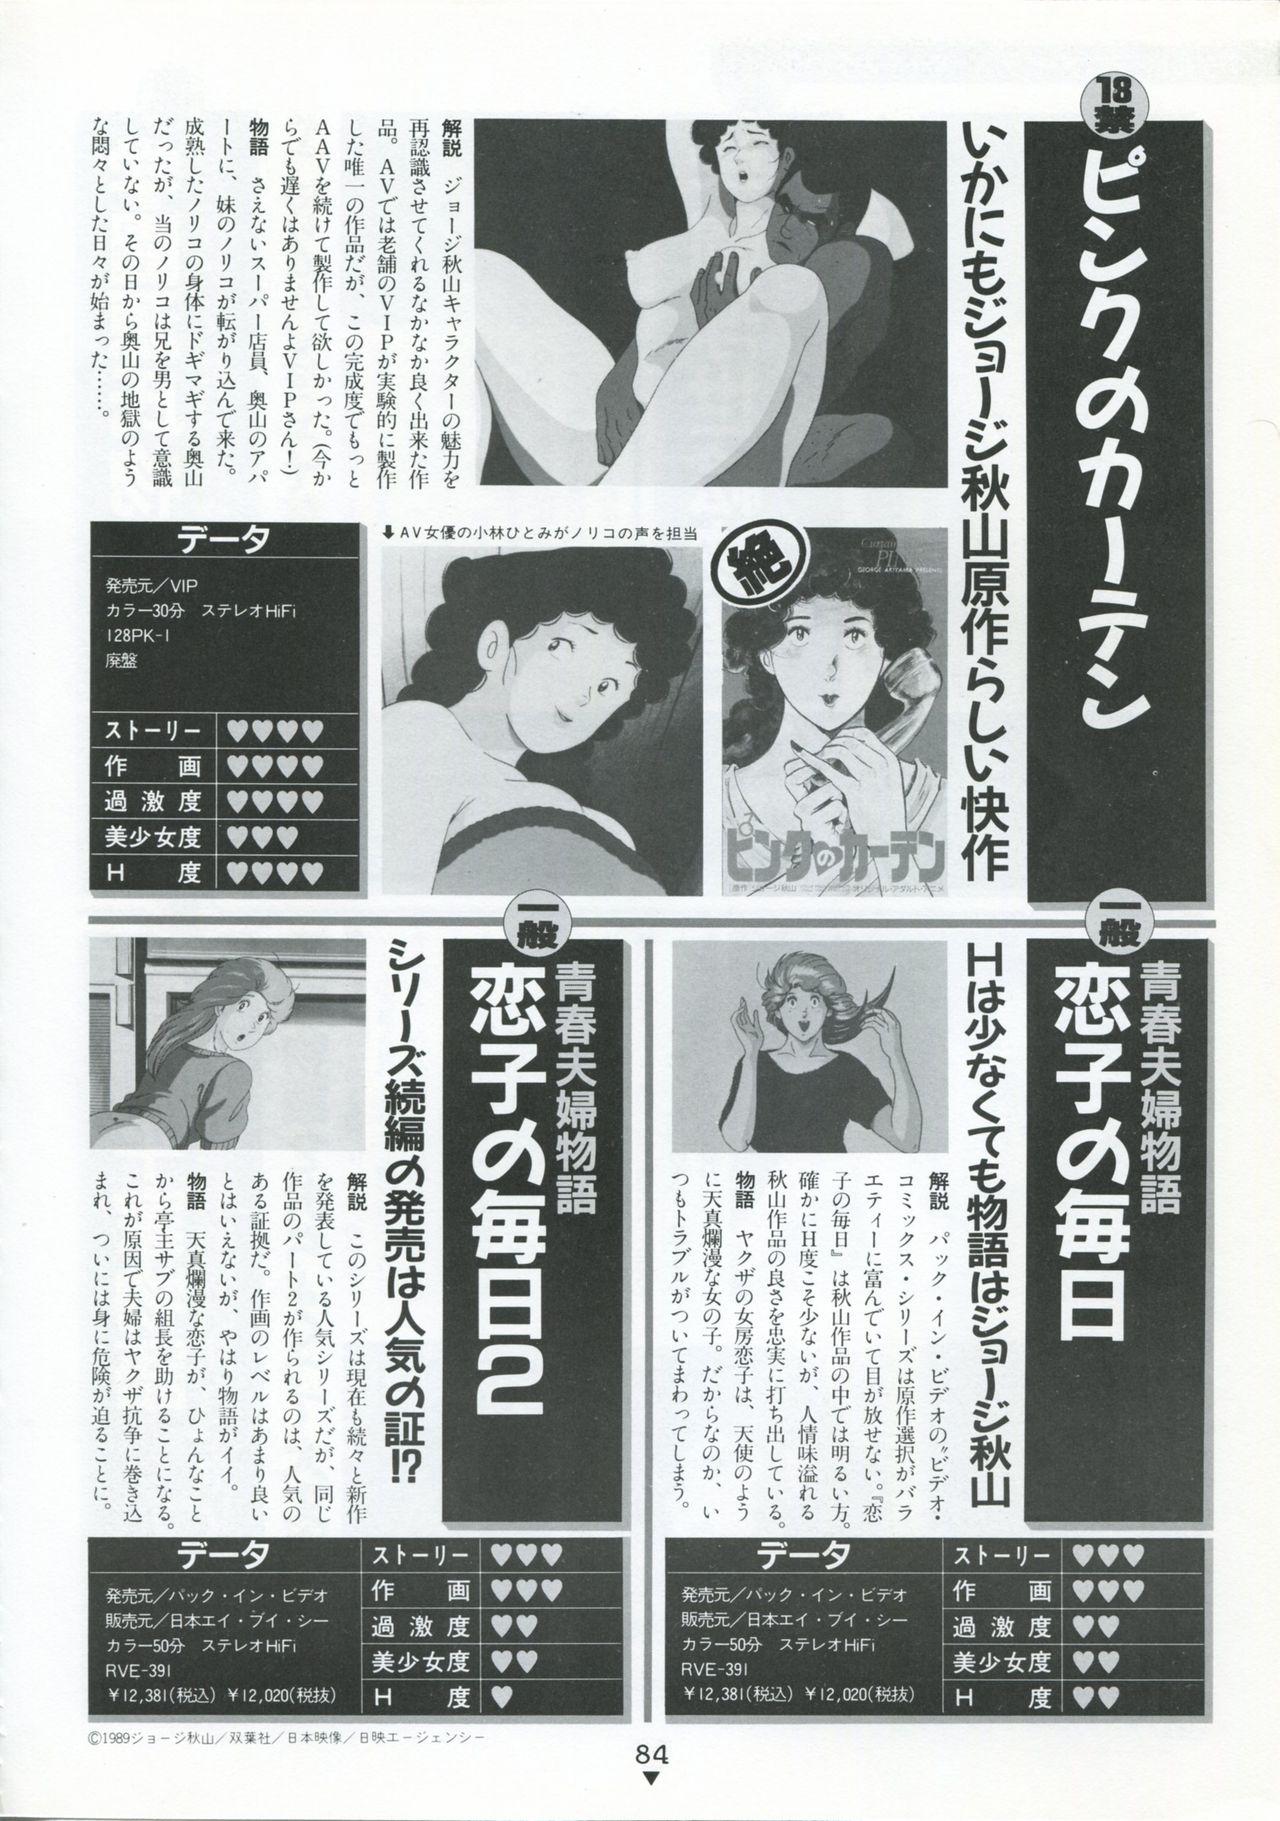 Bishoujo Anime Daizenshuu - Adult Animation Video Catalog 1991 79